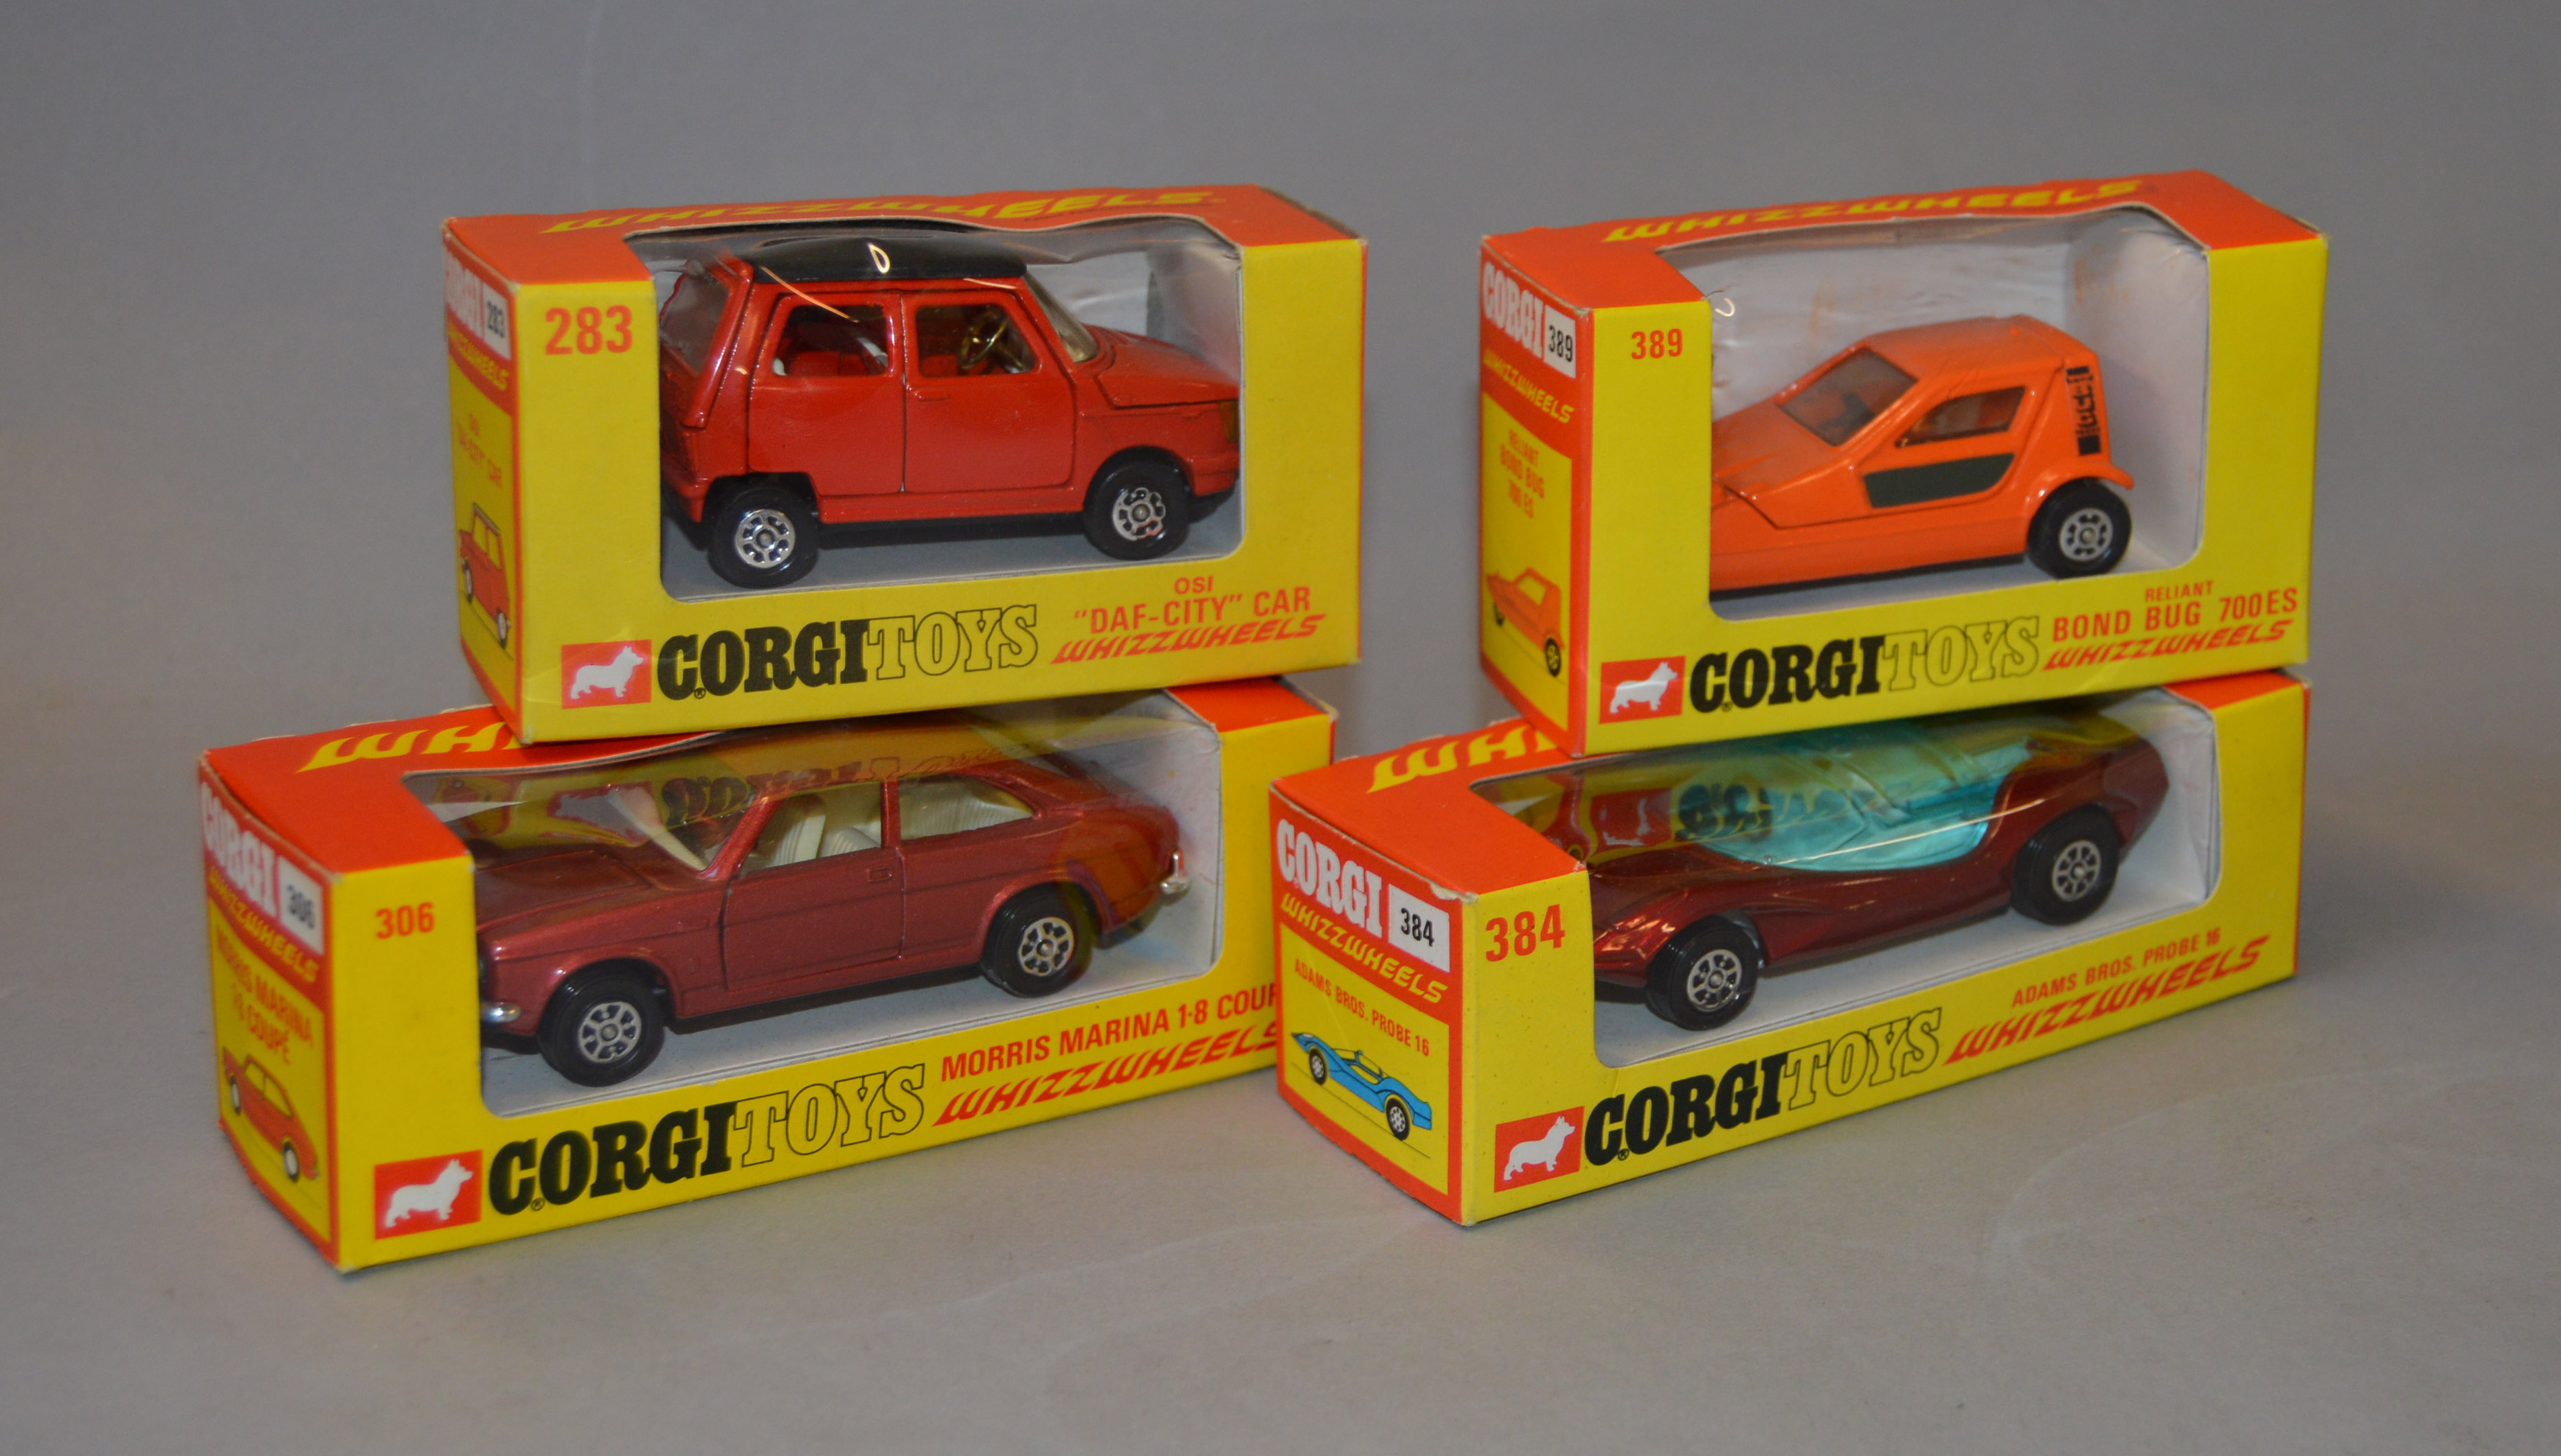 Four Corgi Whizzwheels: #283 DAF-City Car; #389 Bond Bug 700 ES; #306 Morris Marina 1.